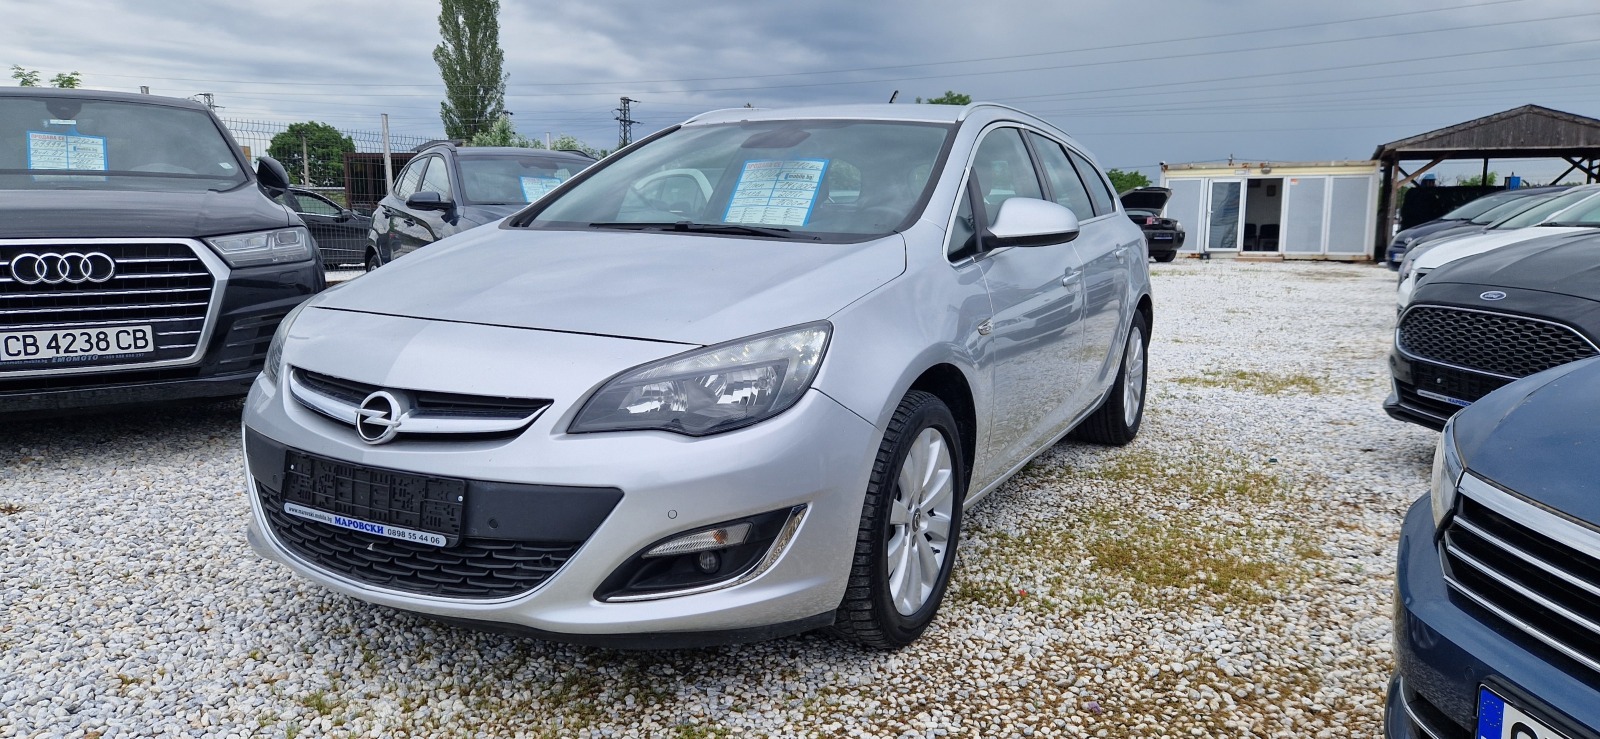 Opel Astra 1.6CDTI BUSINESS - изображение 1